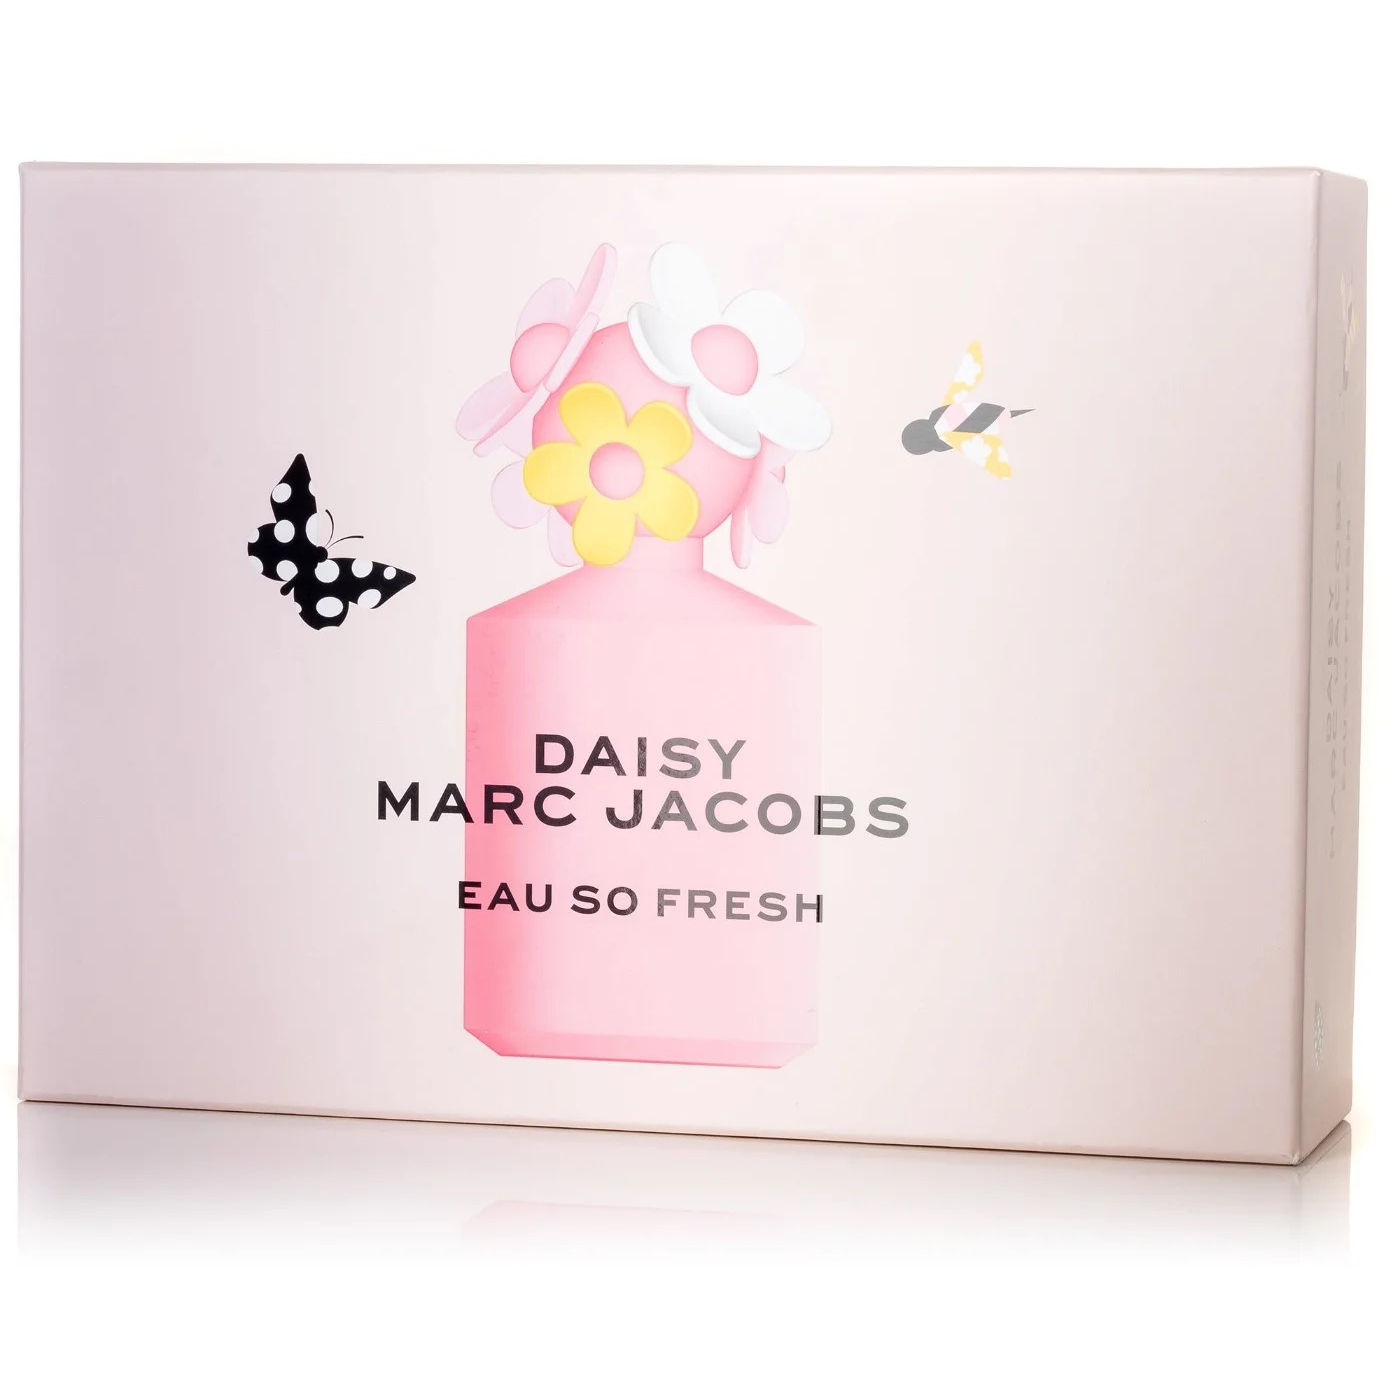 Marc Jacobs Eau So Fresh Daisy Set 3 st.